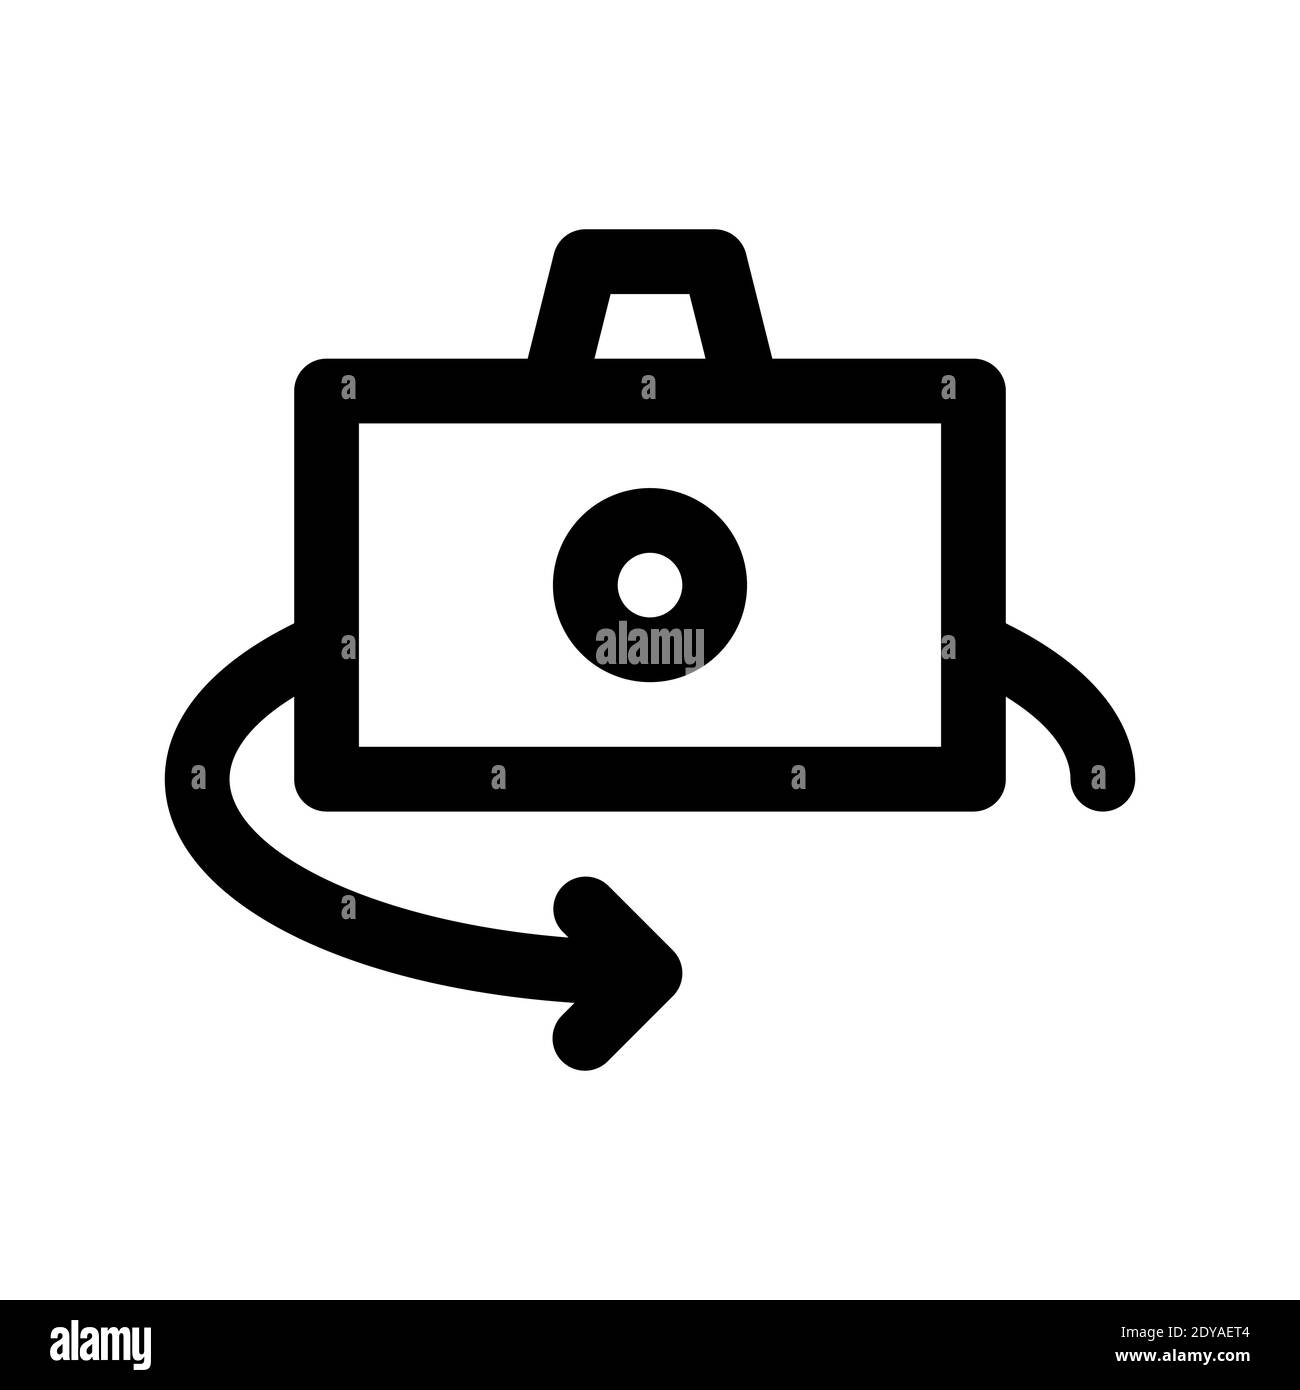 Flip phone camera Black and White Stock Photos & Images - Alamy